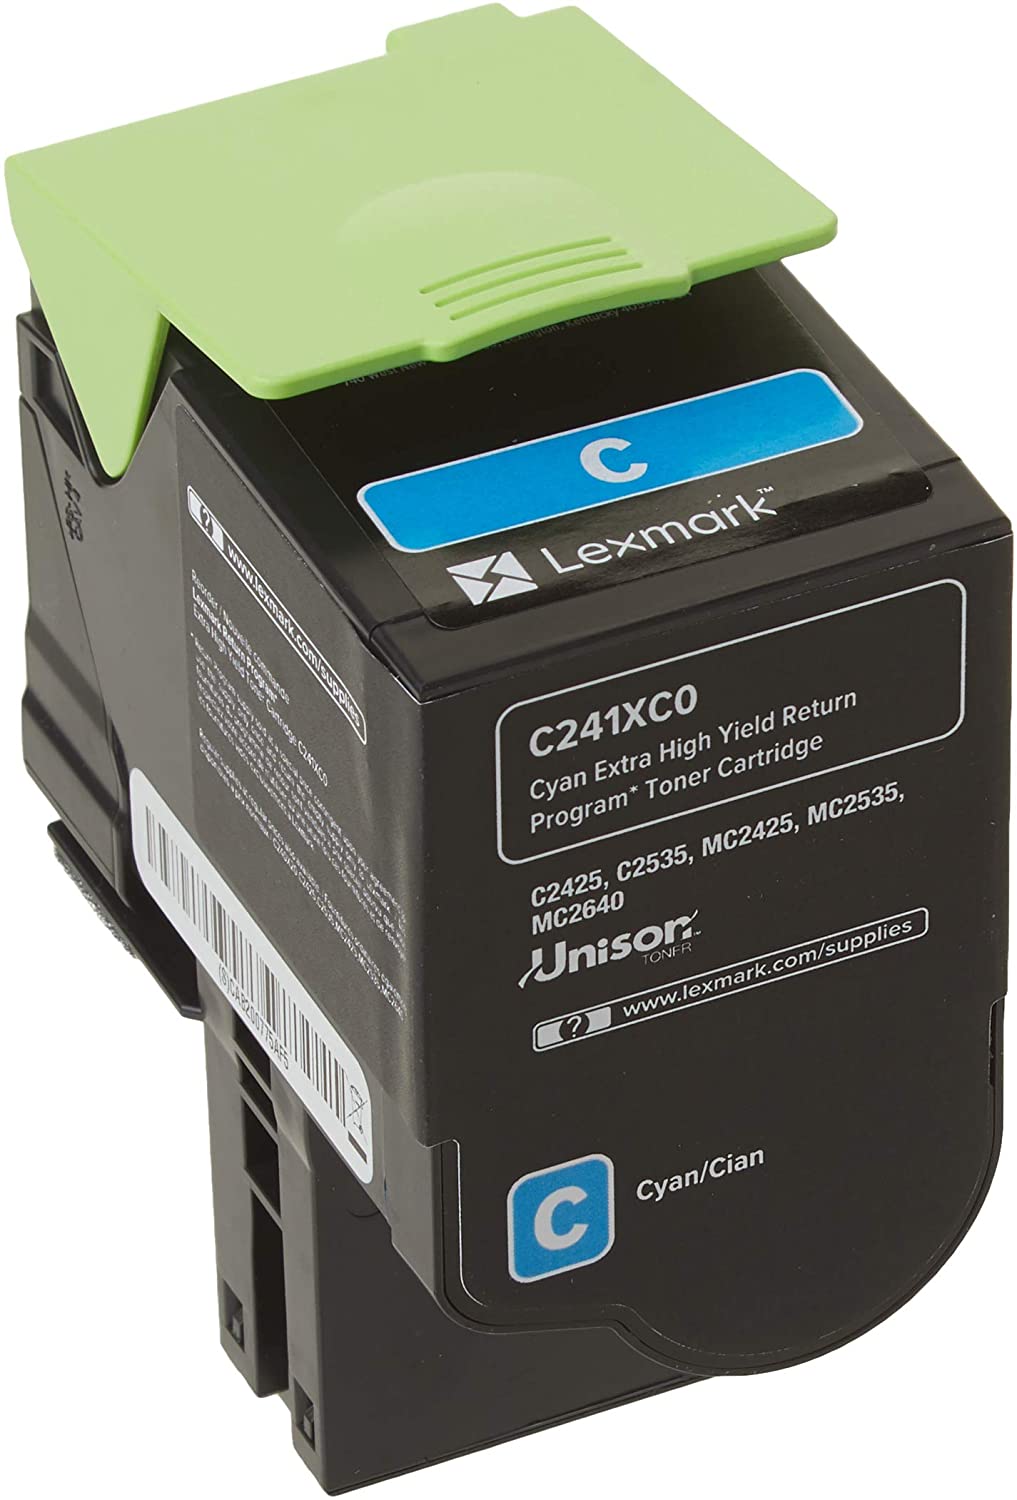 Lexmark C241XC0 Cyan Extra High Yield Return Program Cartridge Toner, Grey